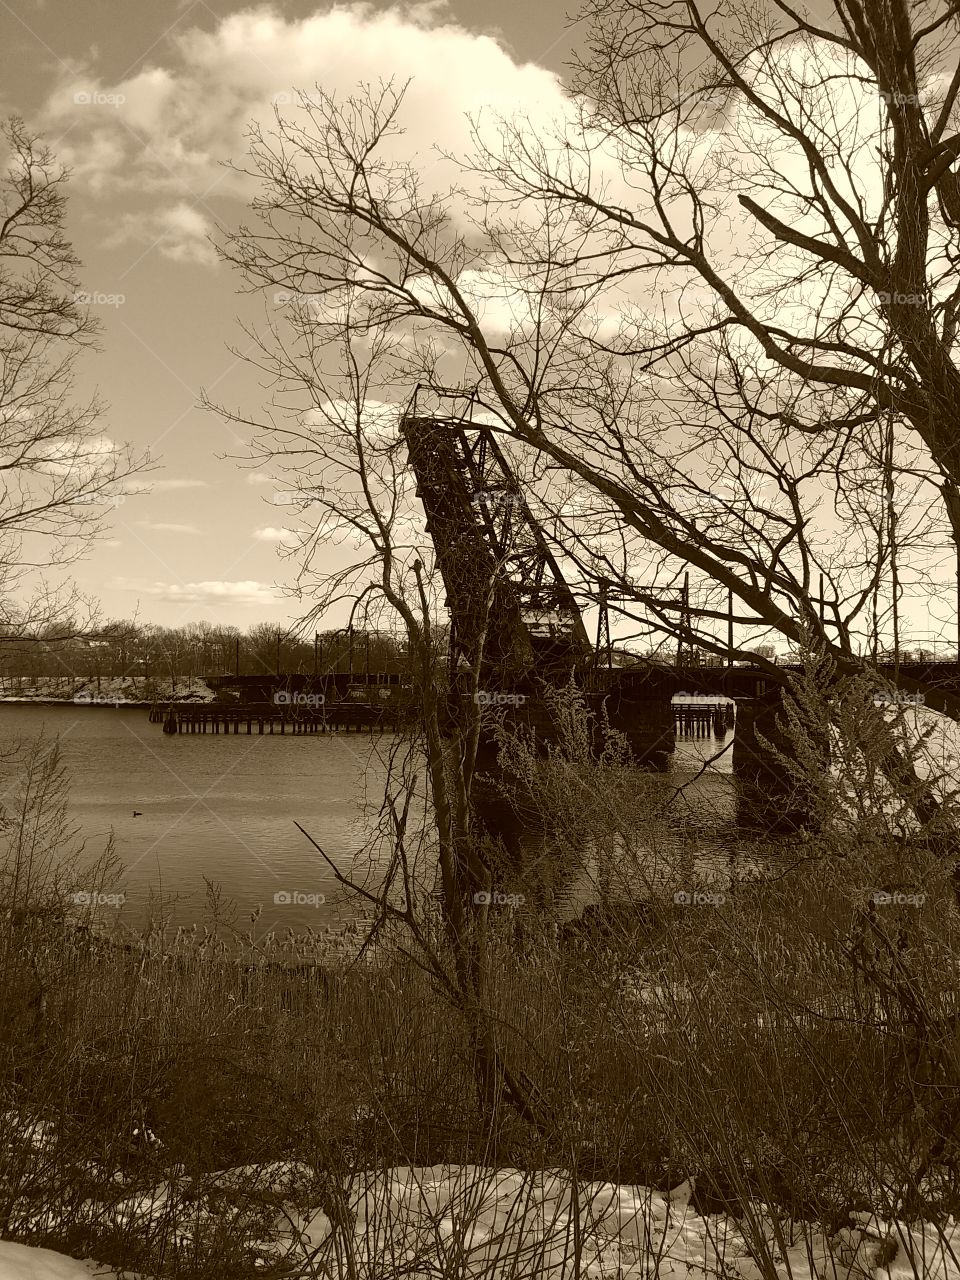 The Old Railroad Red Bridge